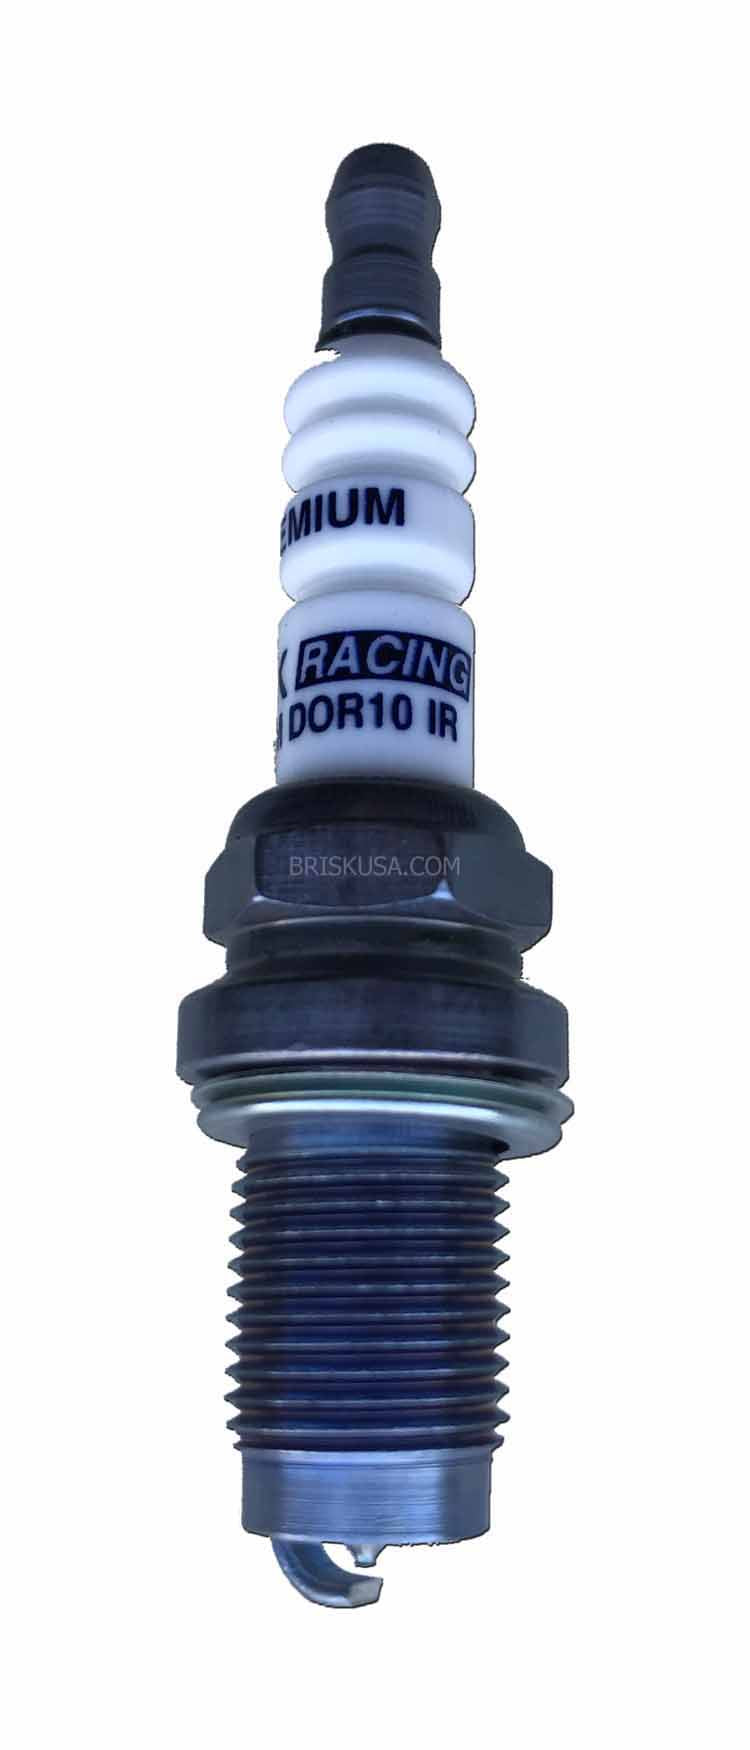 Brisk Iridium Racing DOR10IR Spark Plug